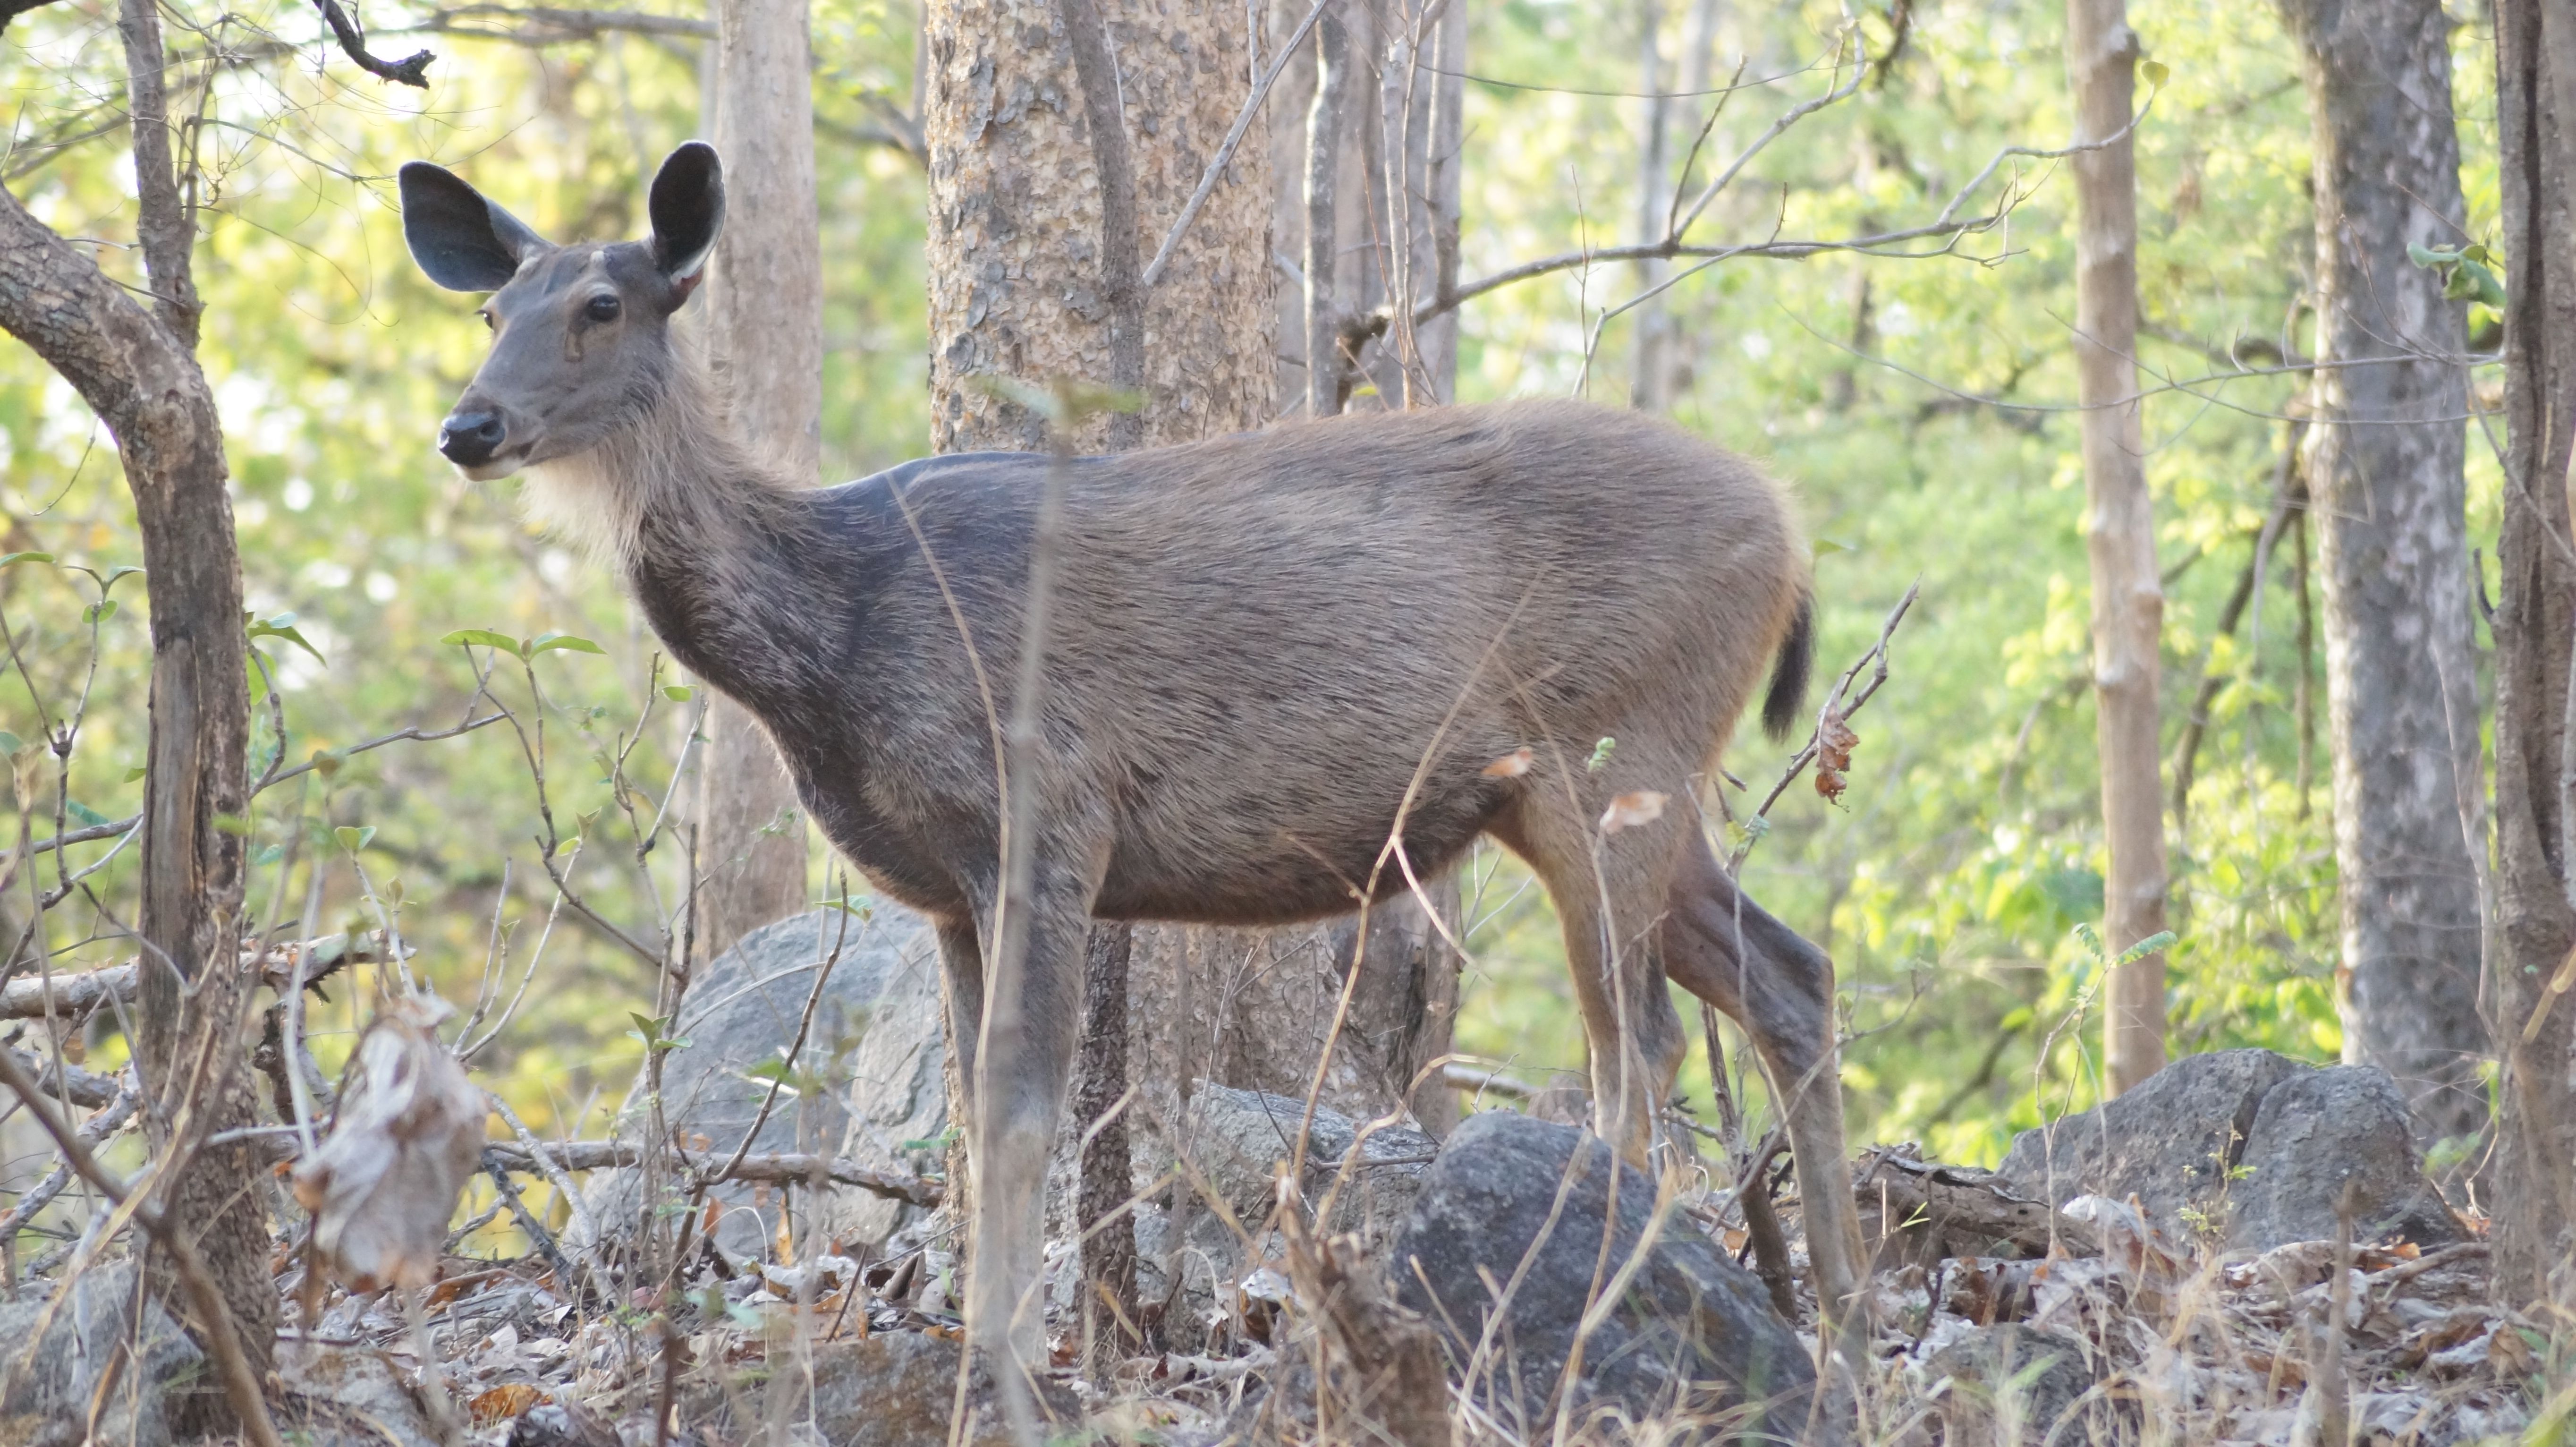 Sambar deer | Nature | Pinterest | Sambar deer